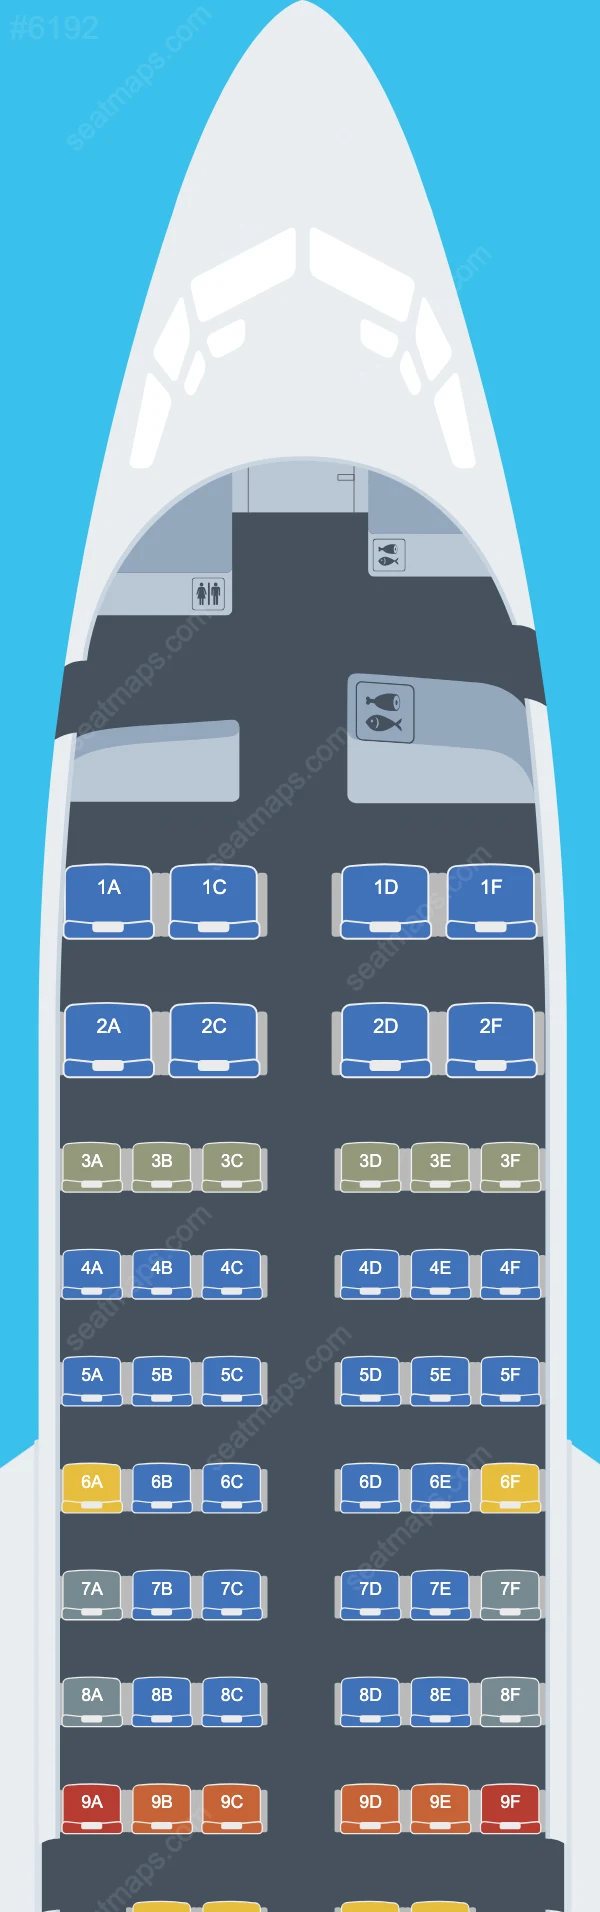 Sriwijaya Air Boeing 737 Seat Maps 737-500